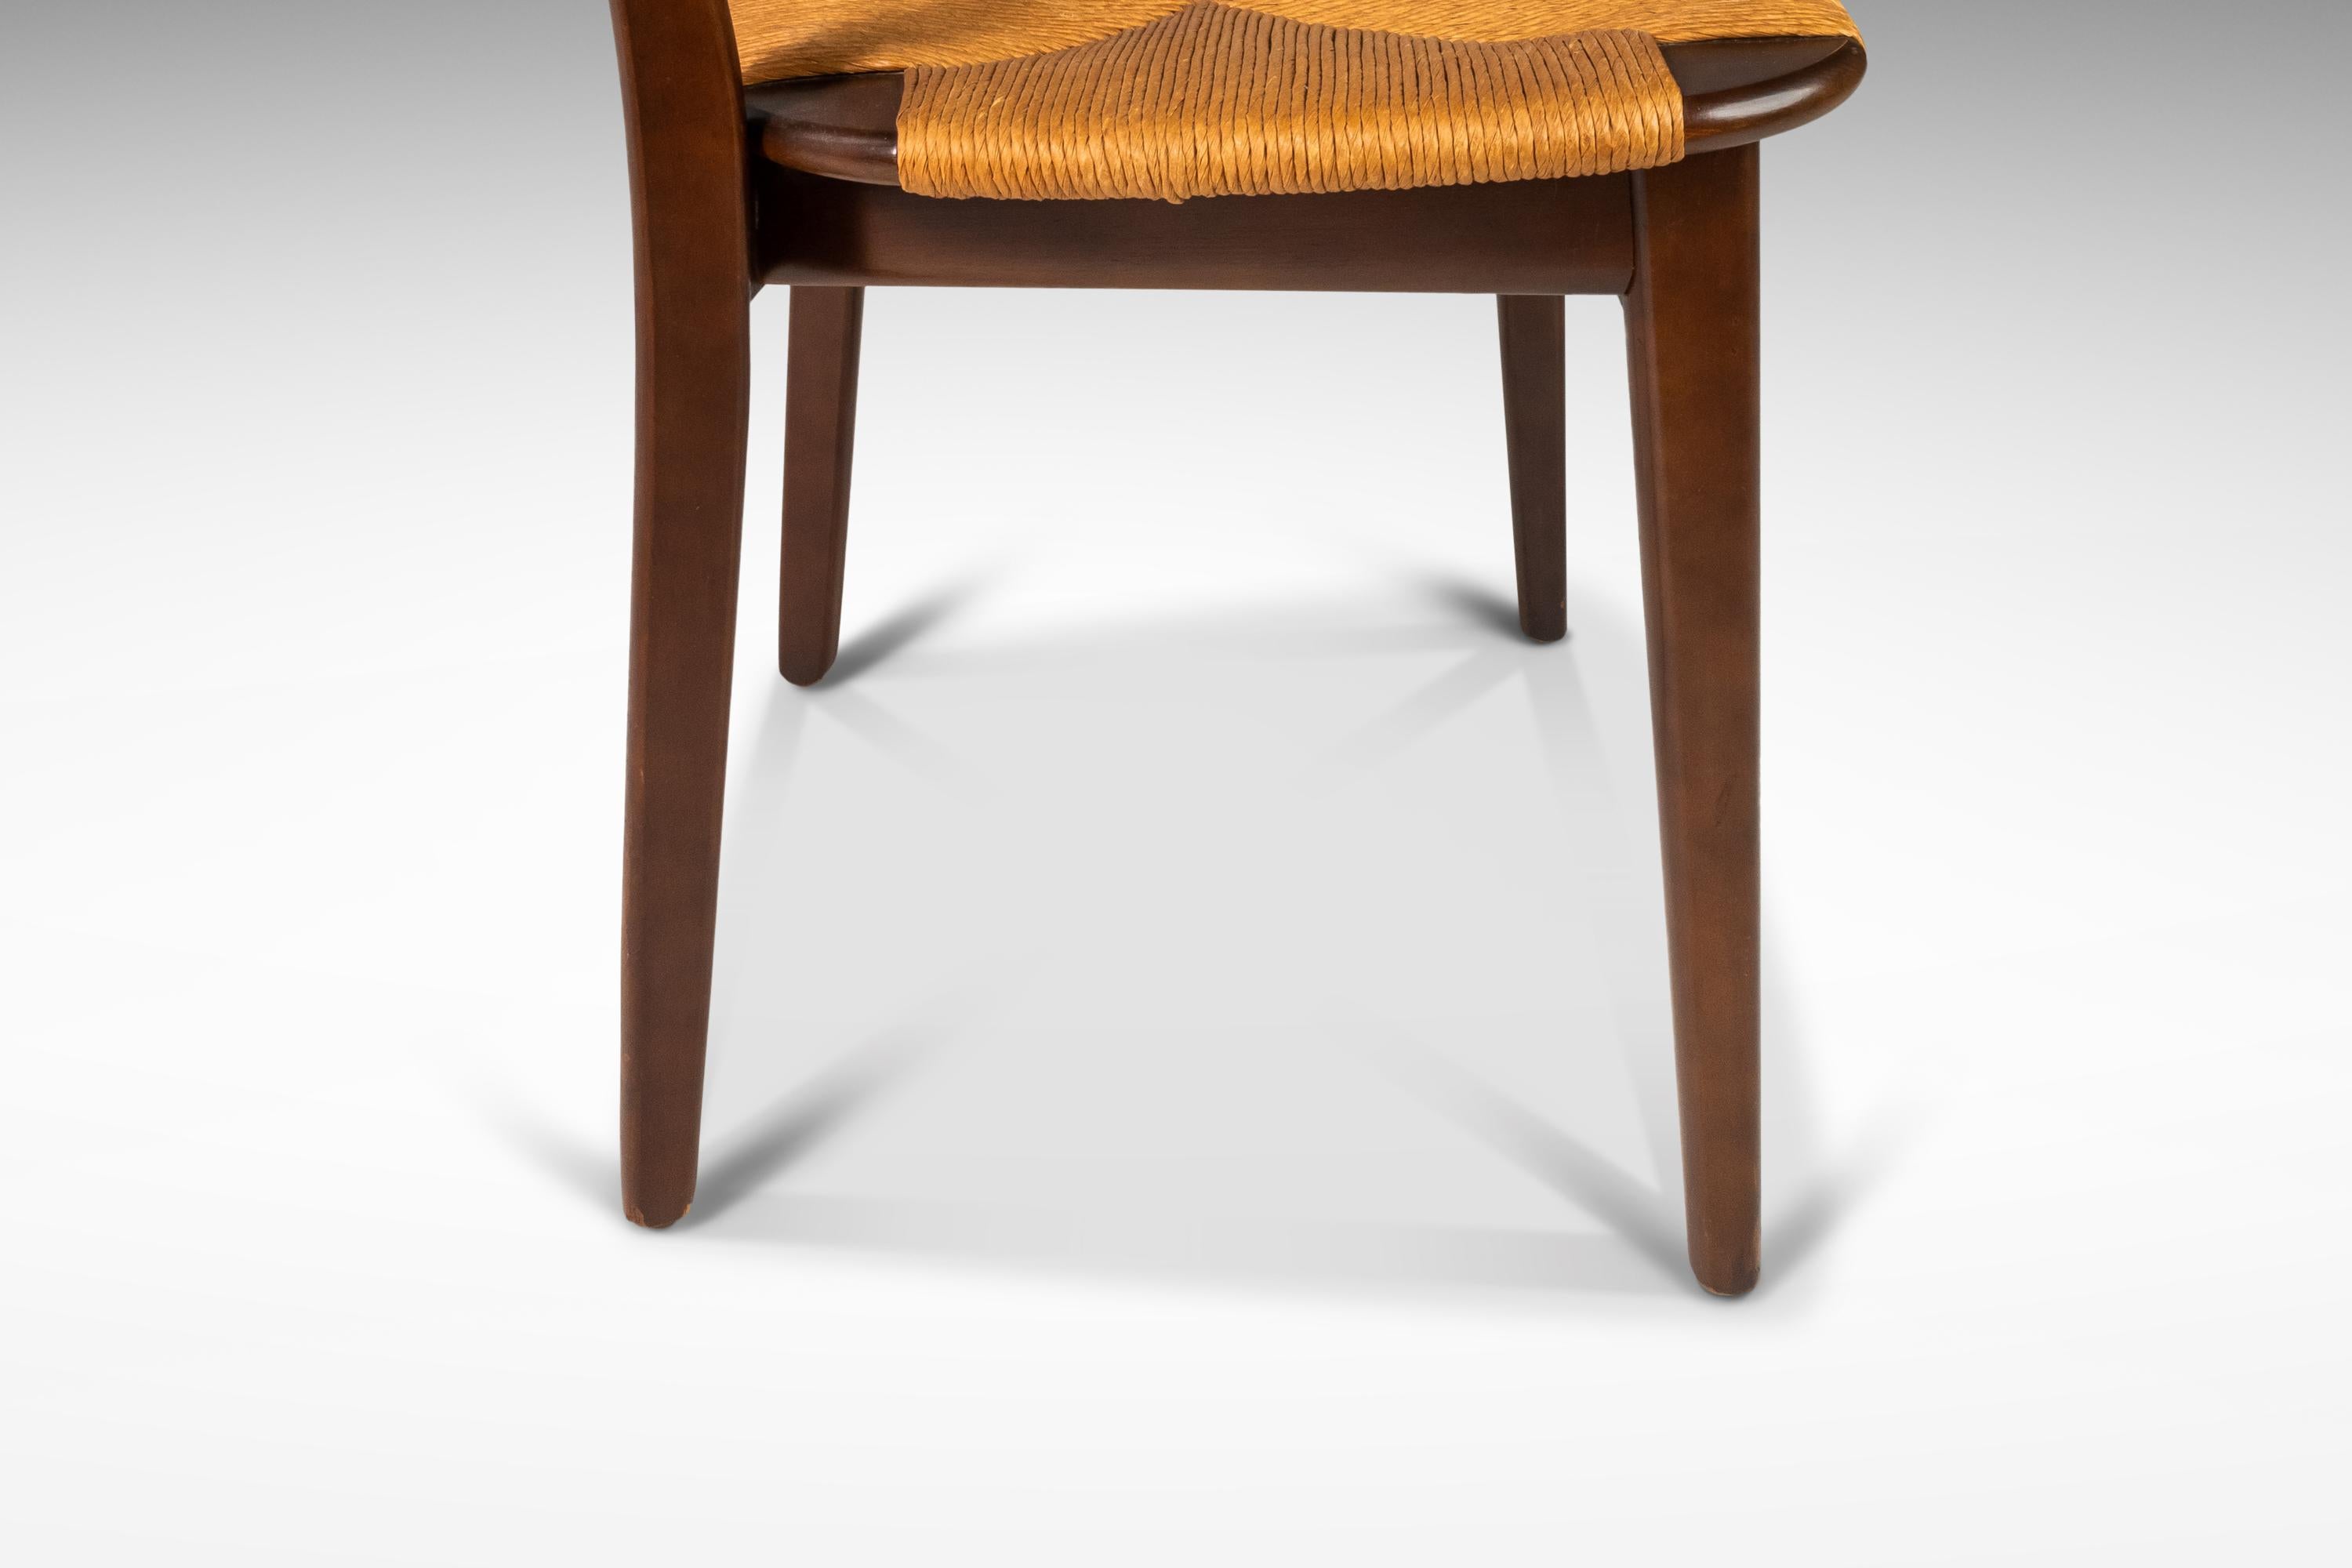 Set of Four (4) Danish Modern Thrush Dining Chairs After Hans J. Wegner, c. 1960 For Sale 13